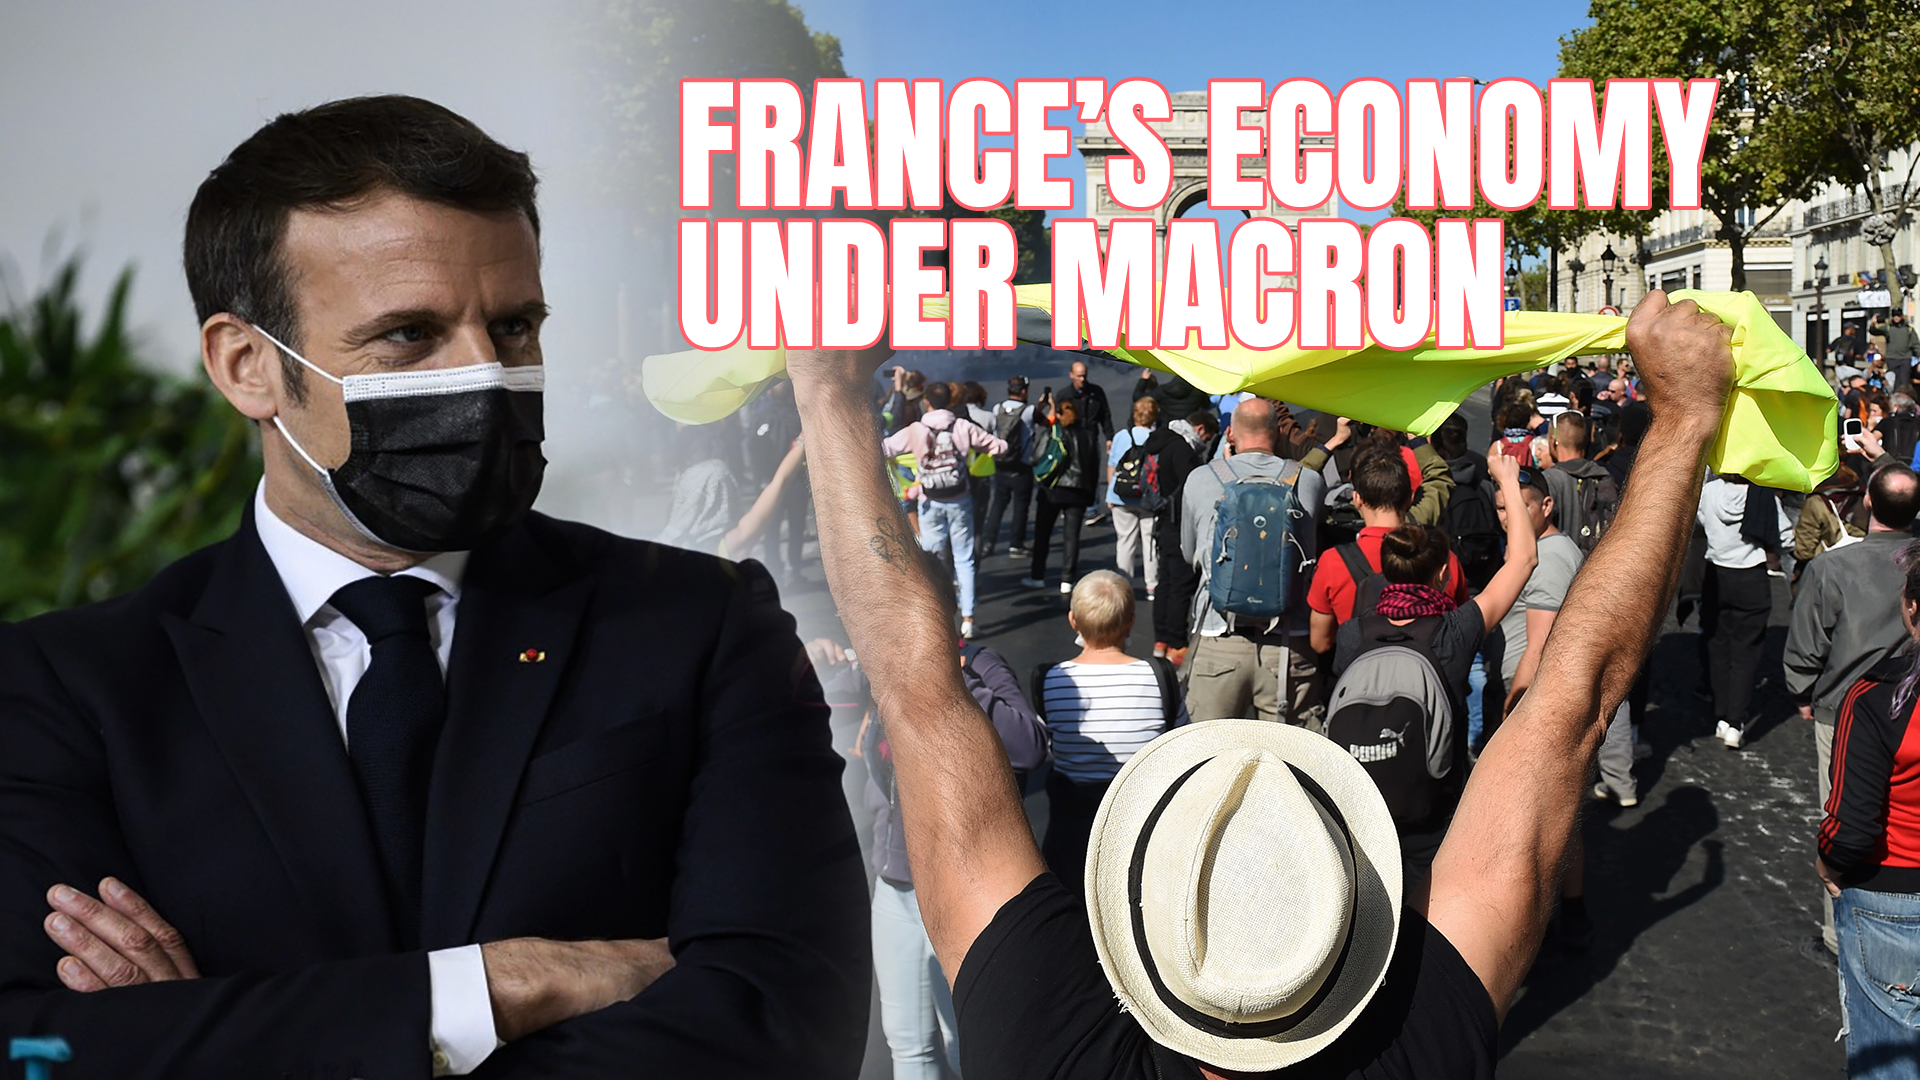 Five years under Macron